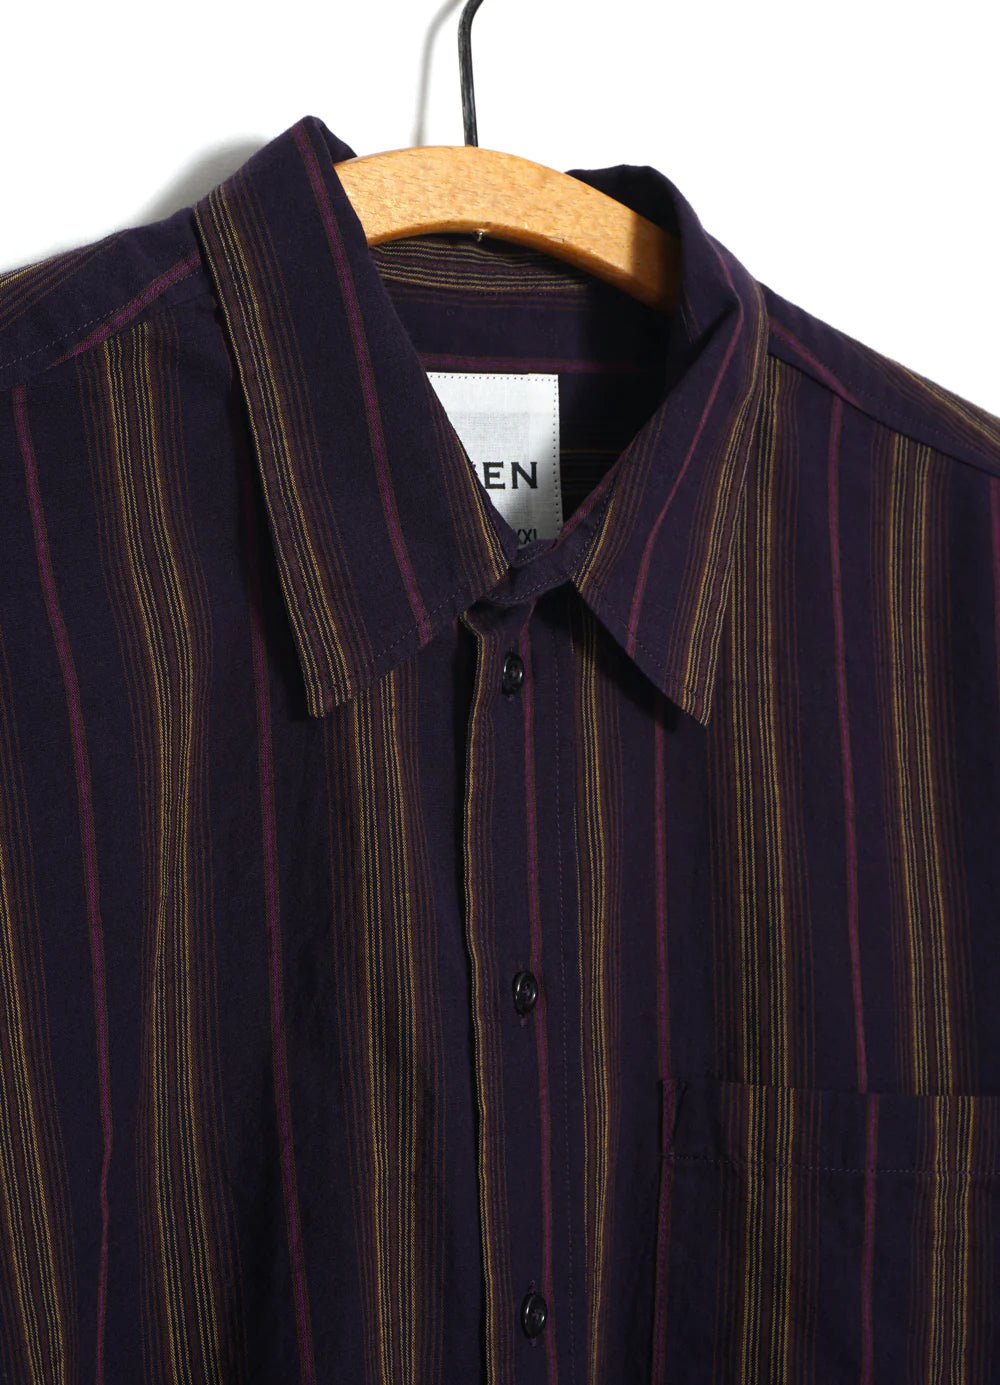 Hansen Garments Reidar Short Sleeve Shirt